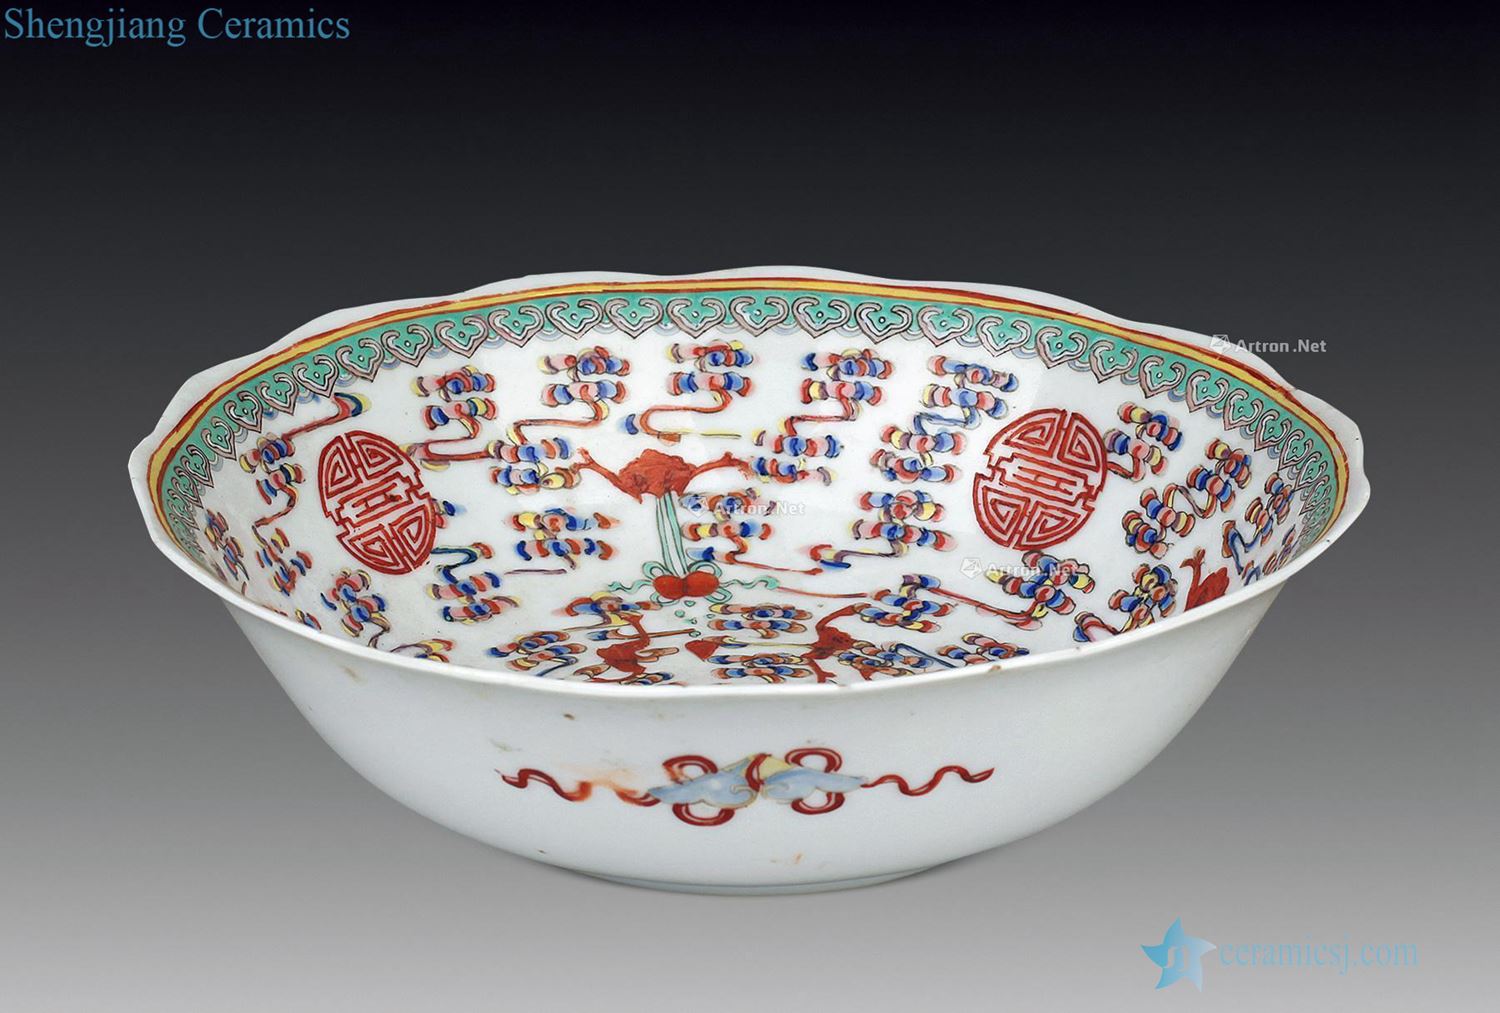 Pastel reign of qing emperor guangxu live green-splashed bowls